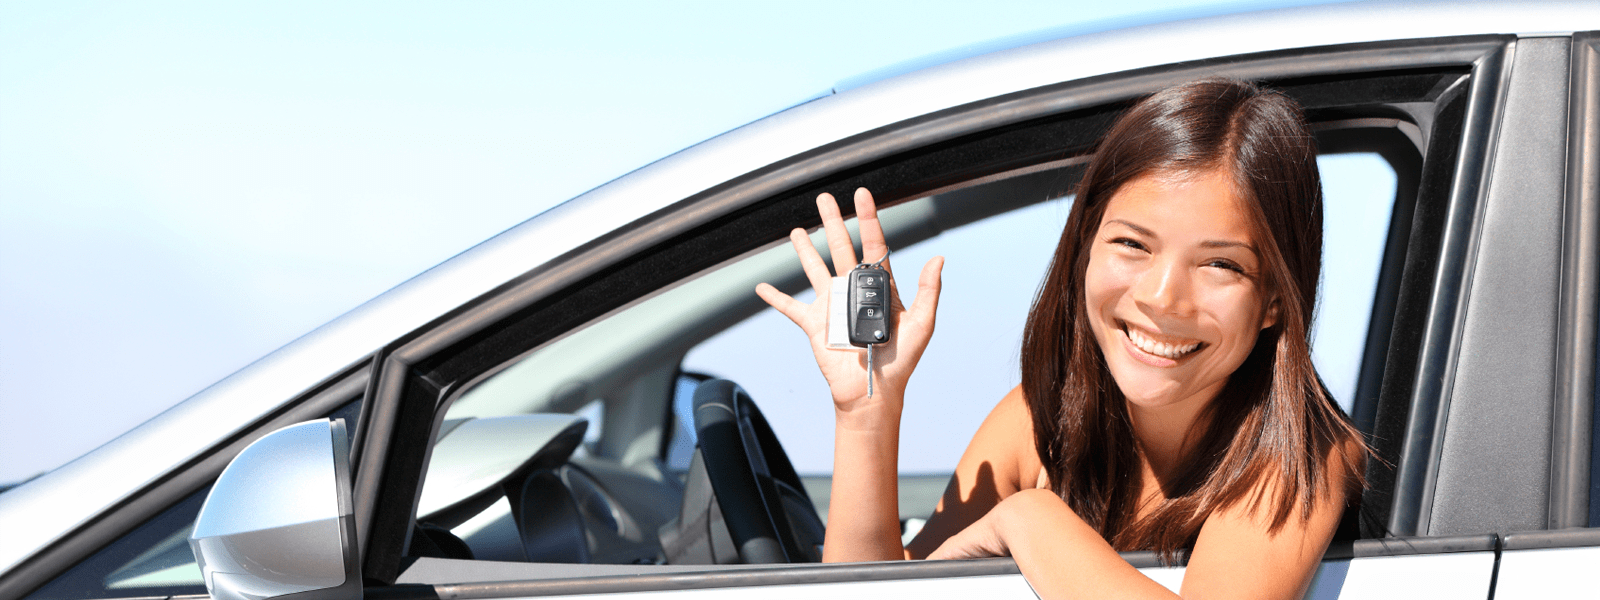 Car Breathalyzer Help Ignition Interlock Device